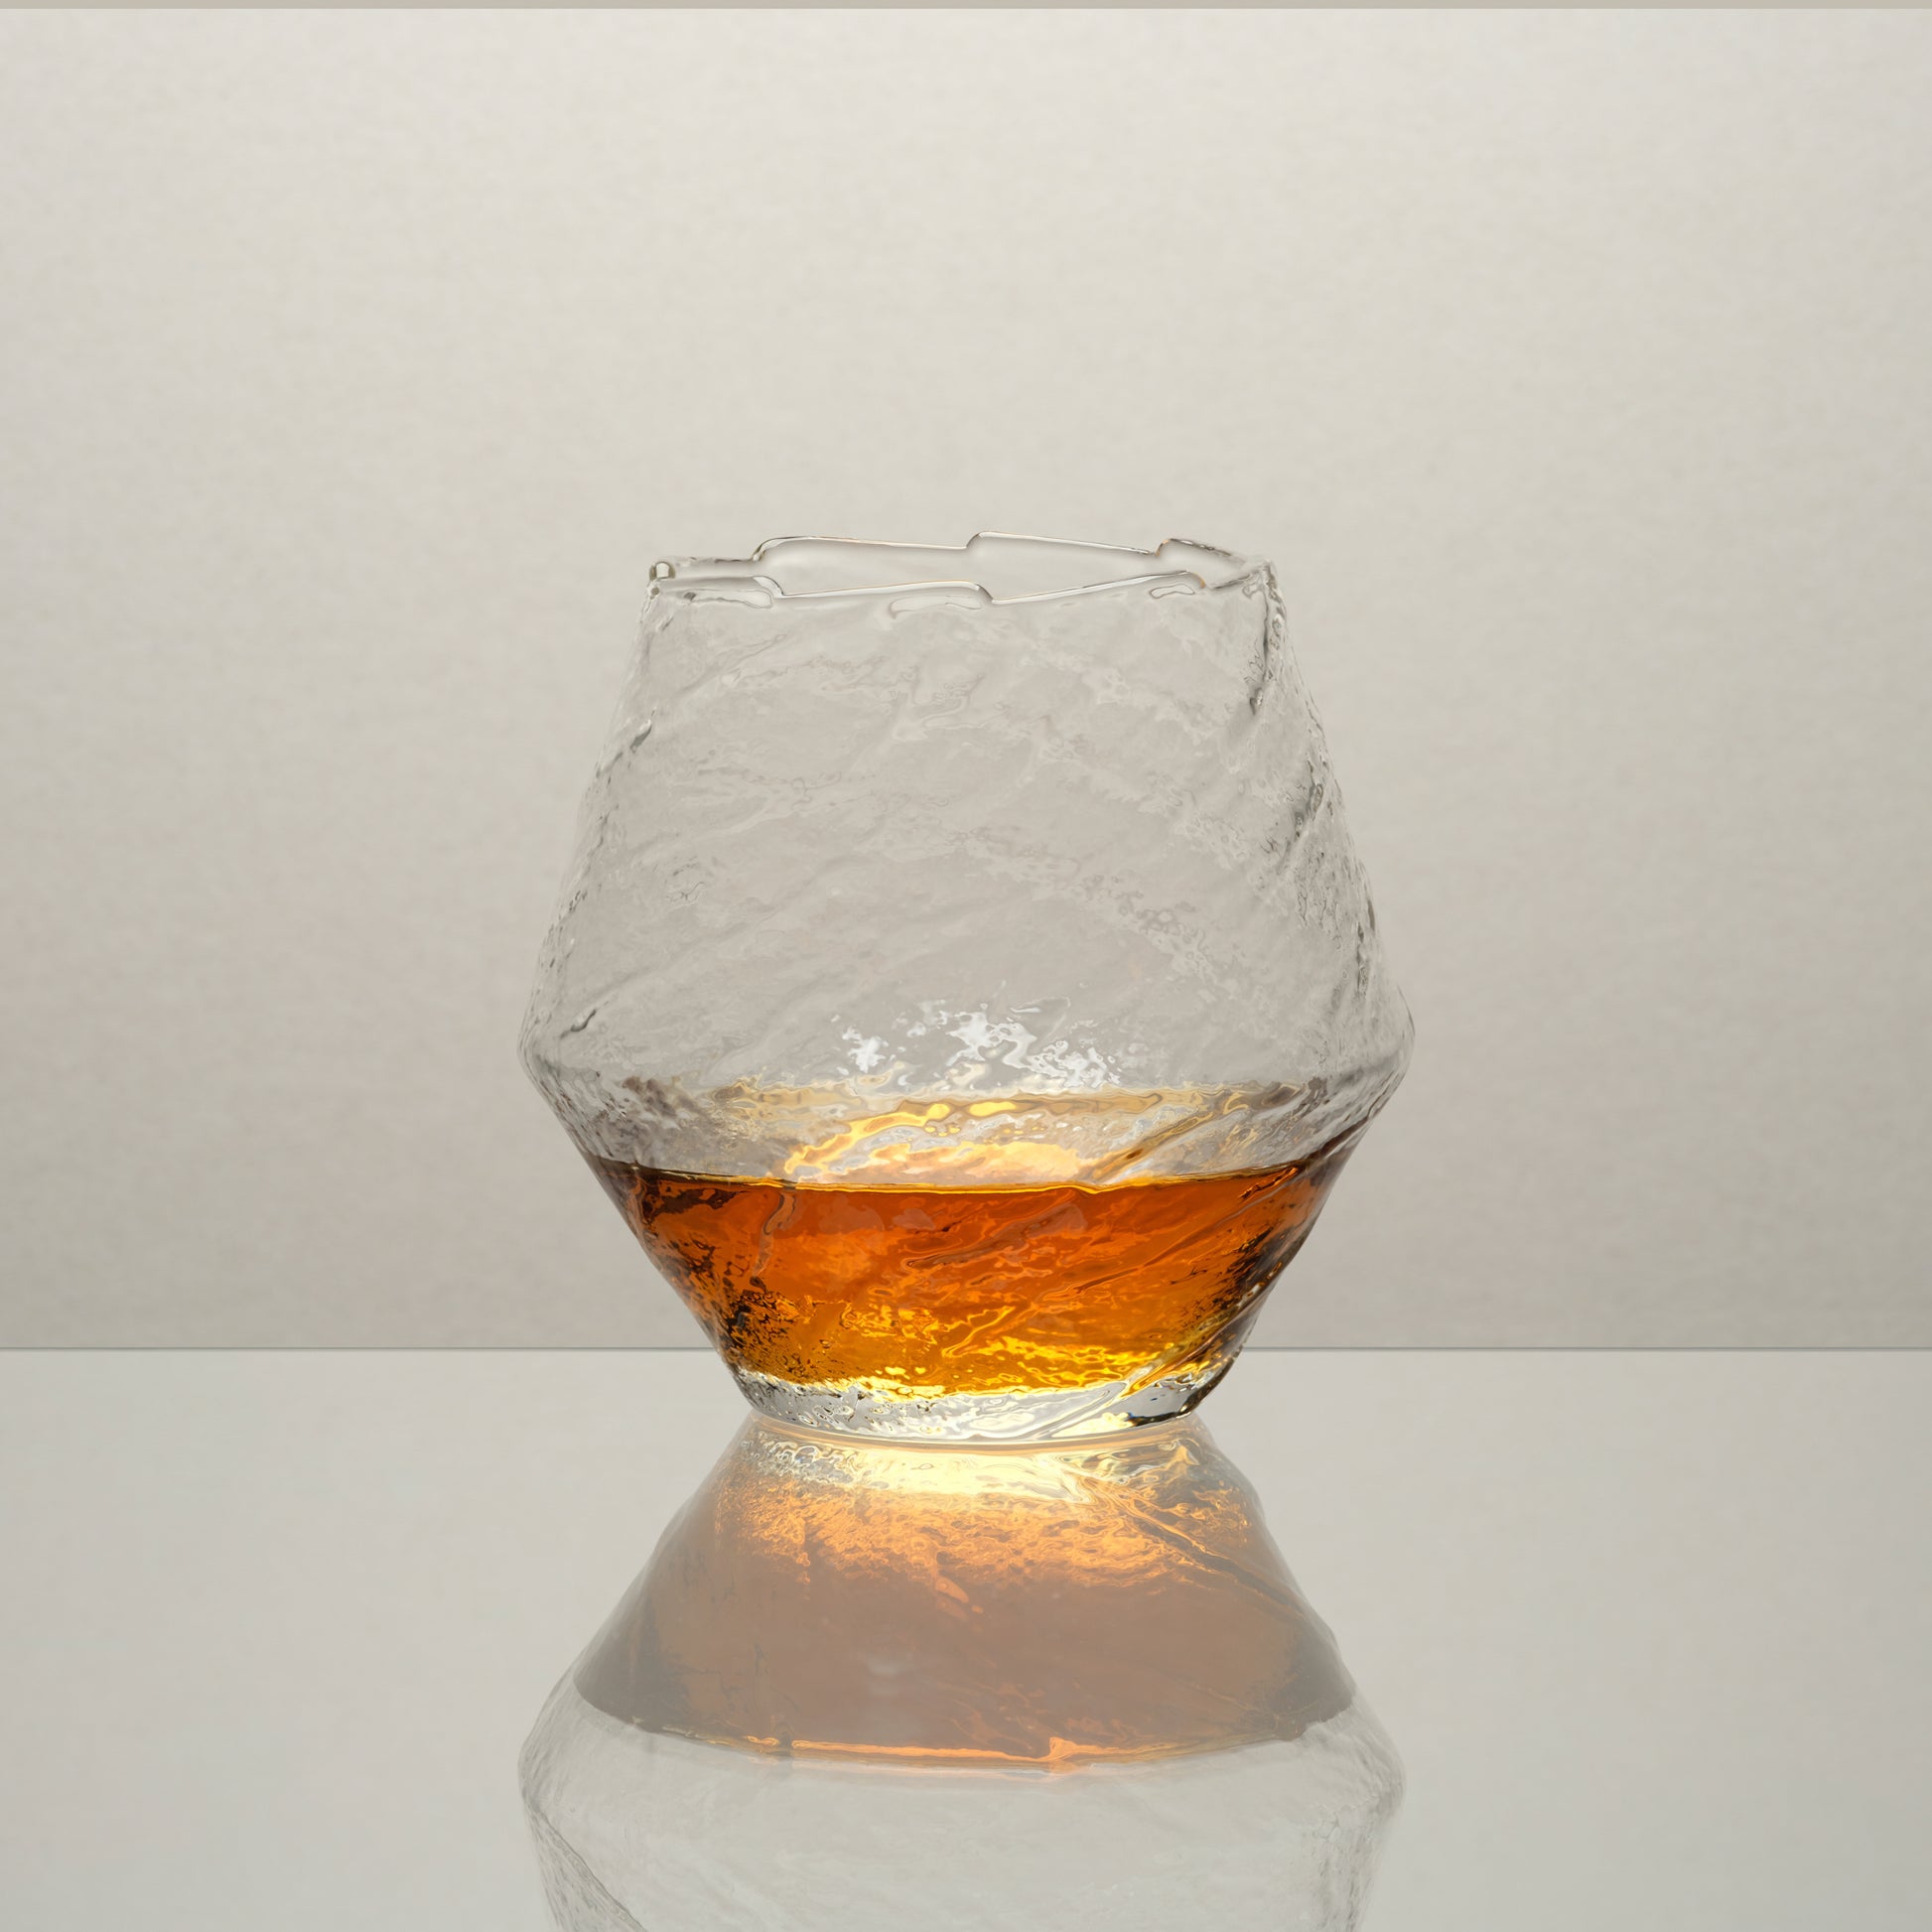 Japan Inspired Snow Glass